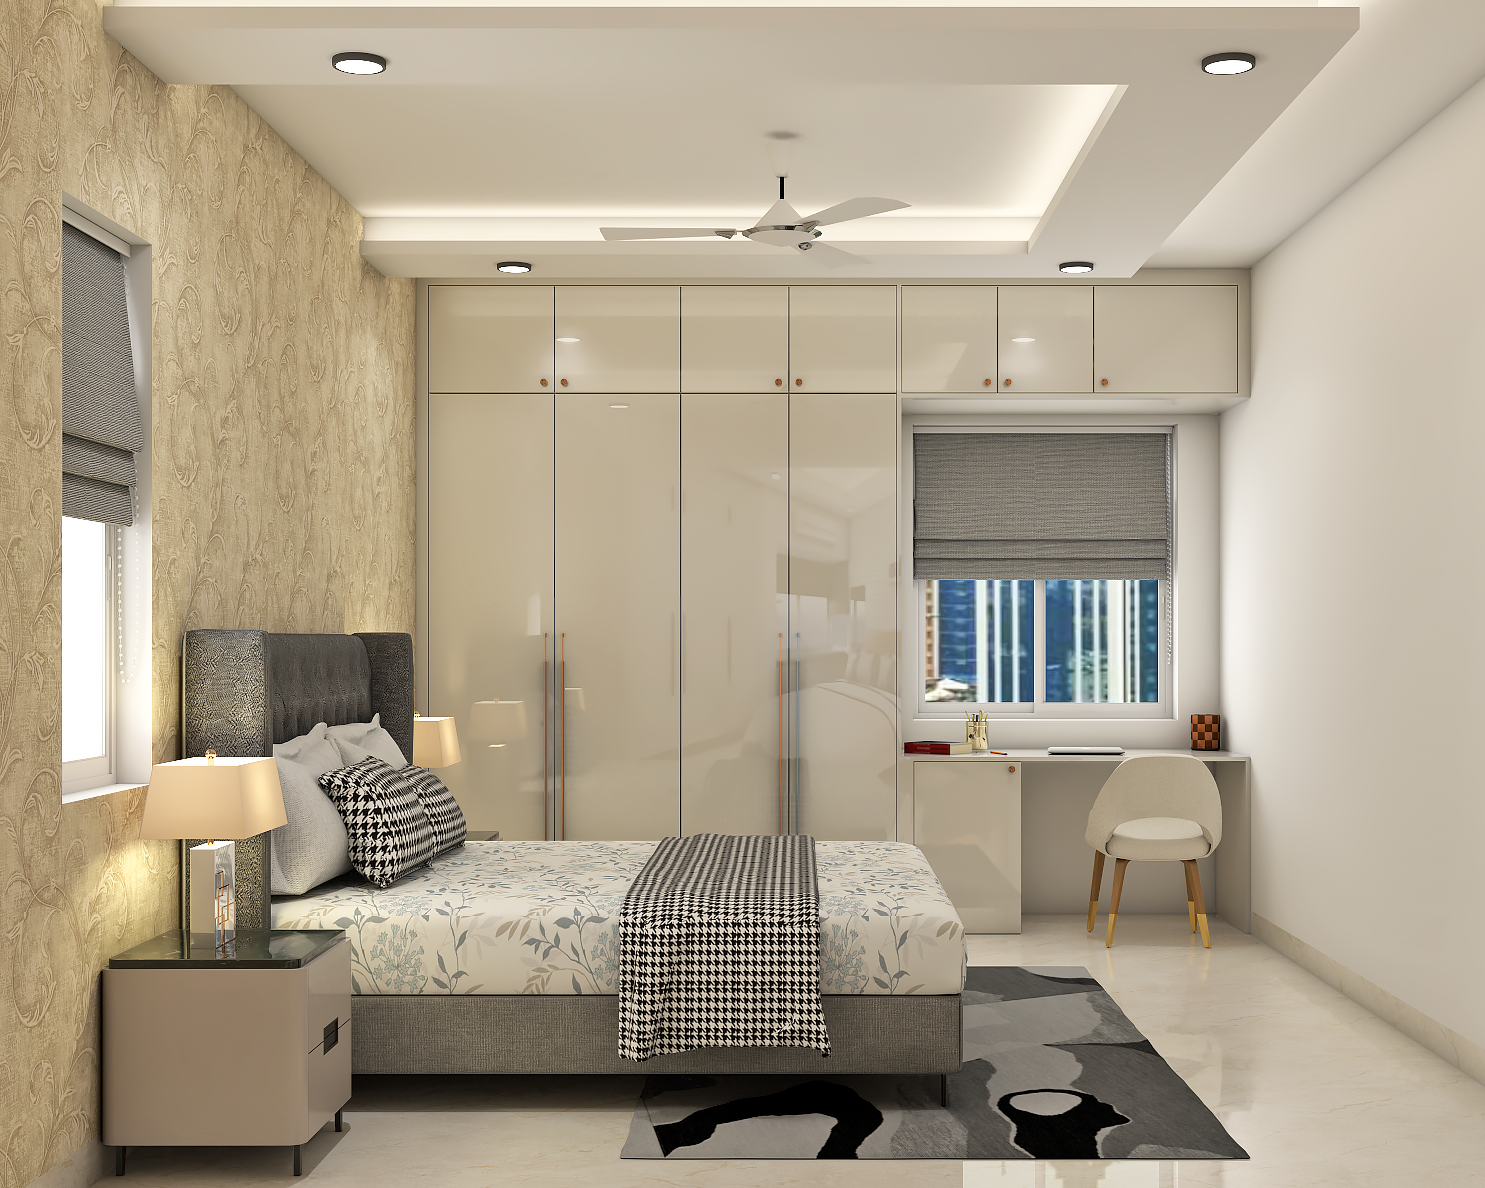 Modern Master Bedroom Design With Wardrobe And Desk - Livspace